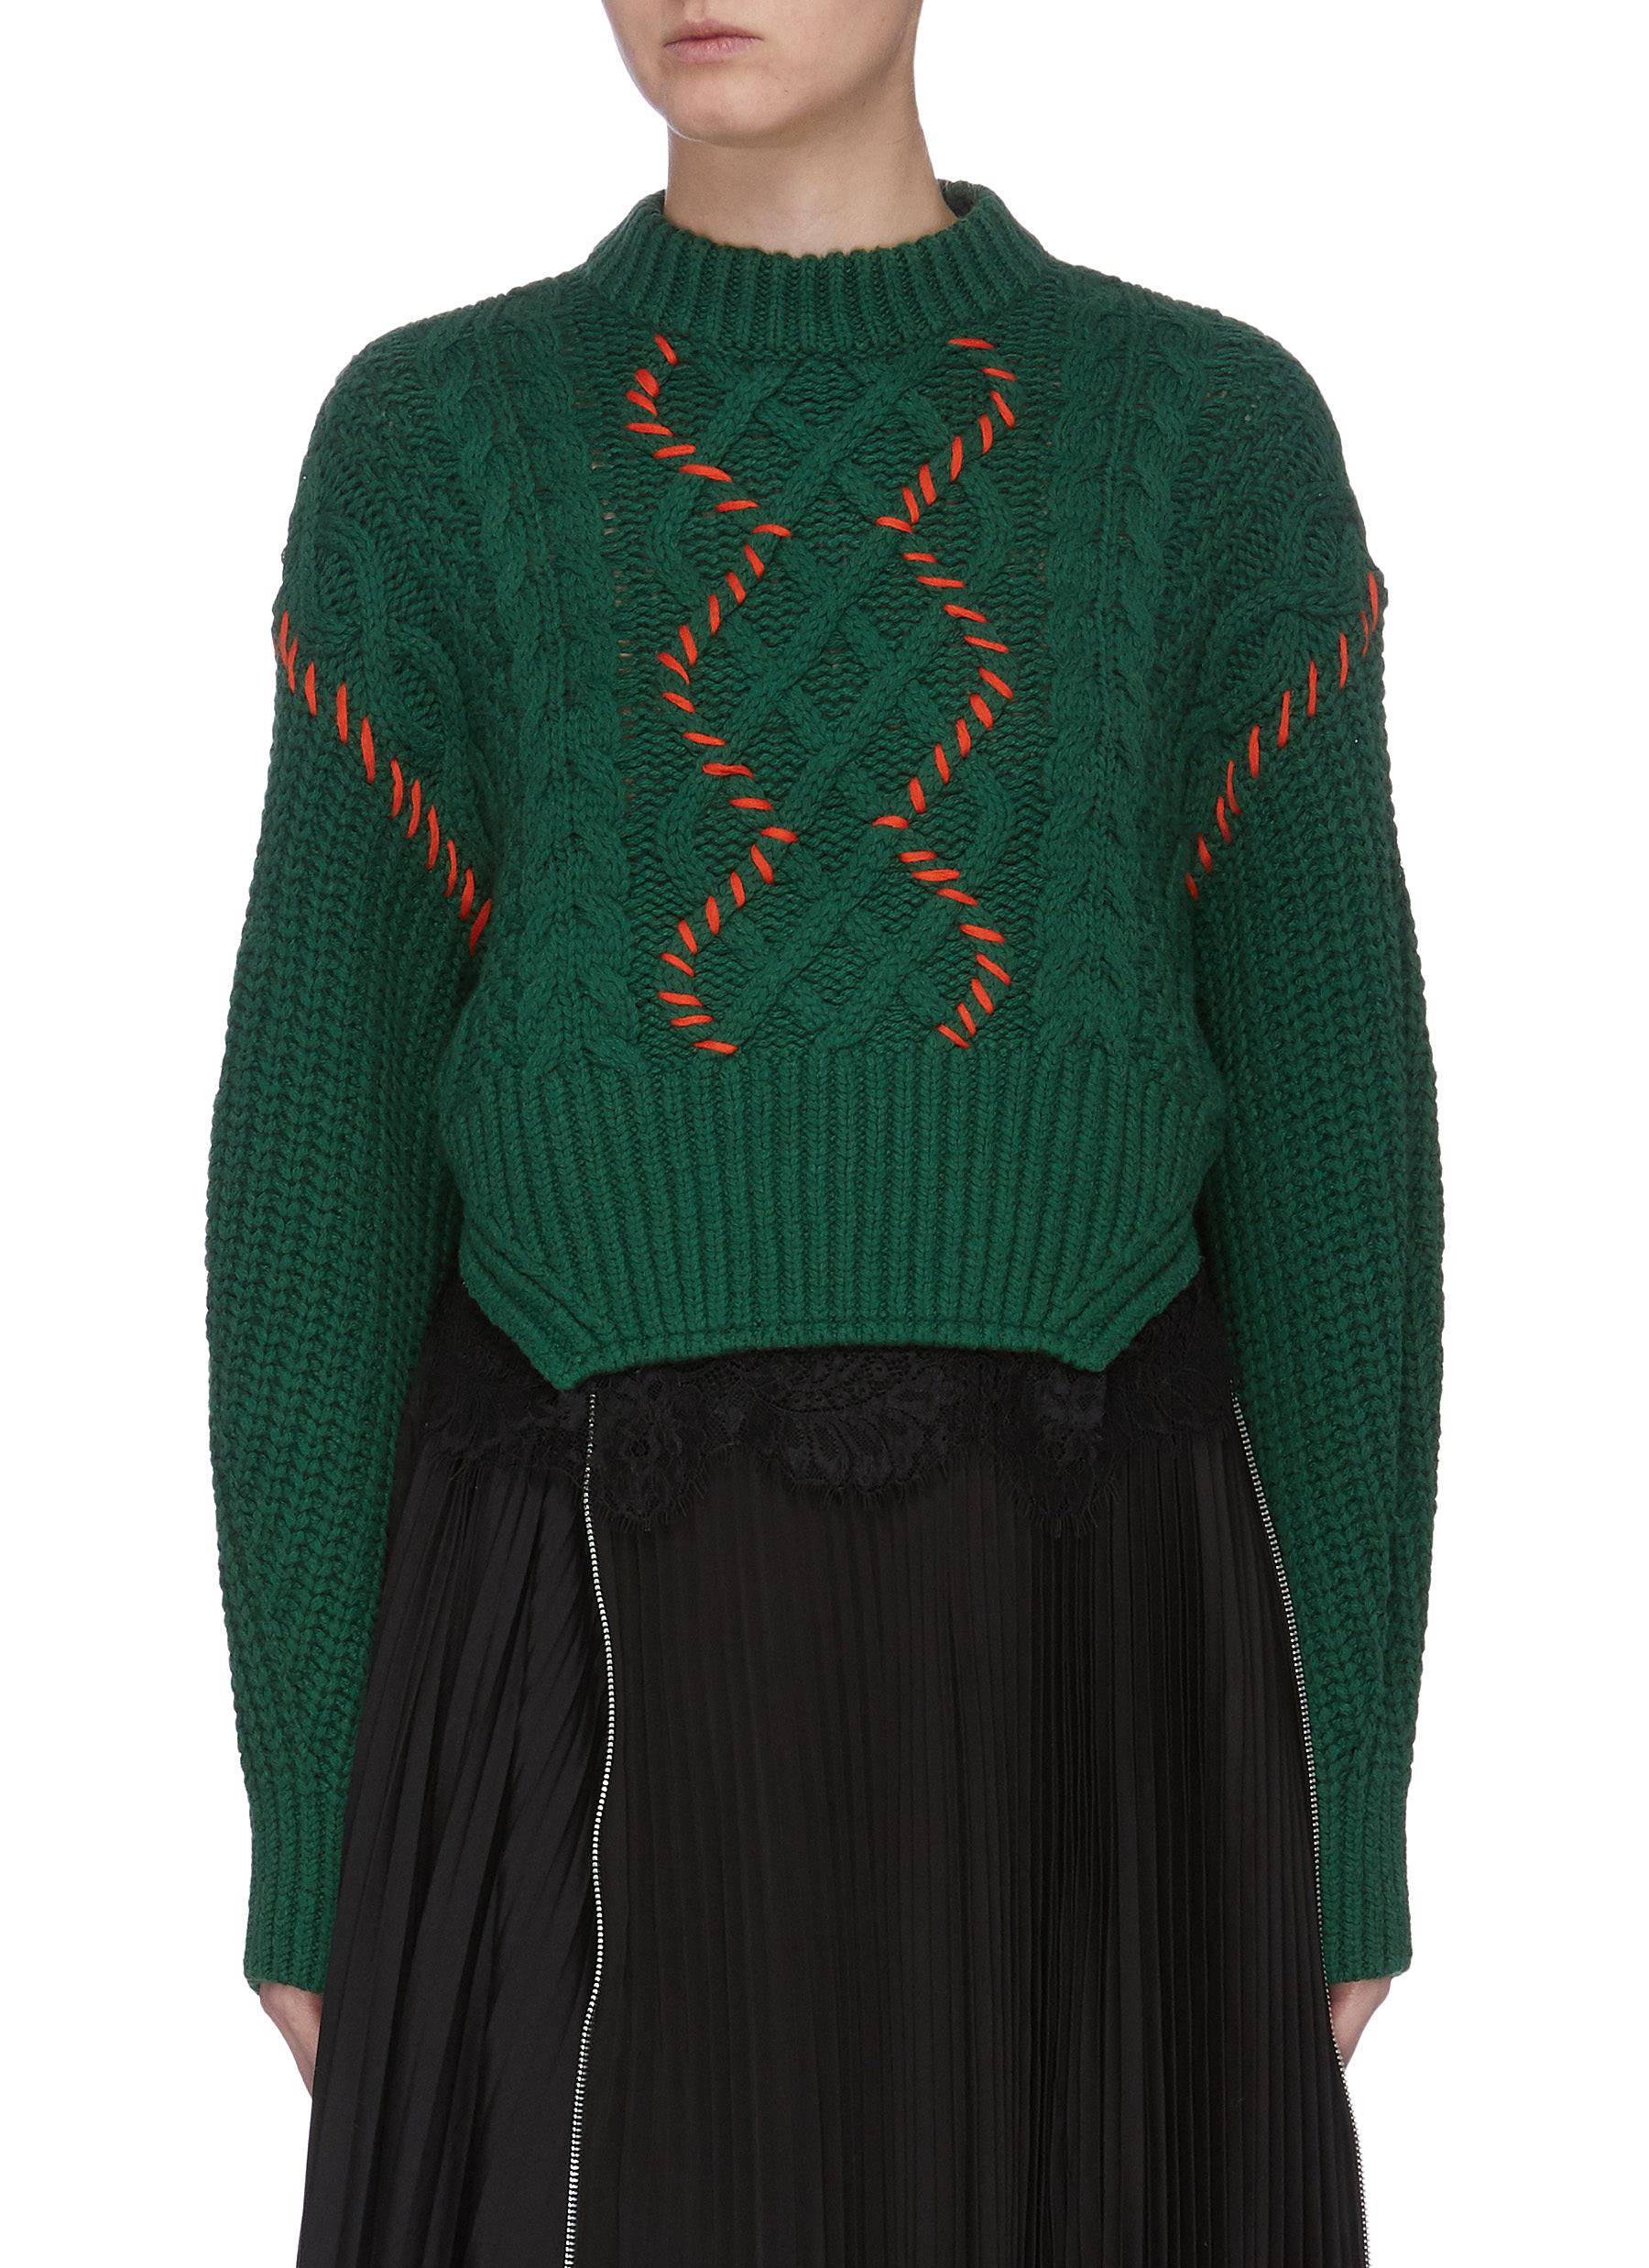 Lace hem contrast stitch cable knit sweater by Self-Portrait